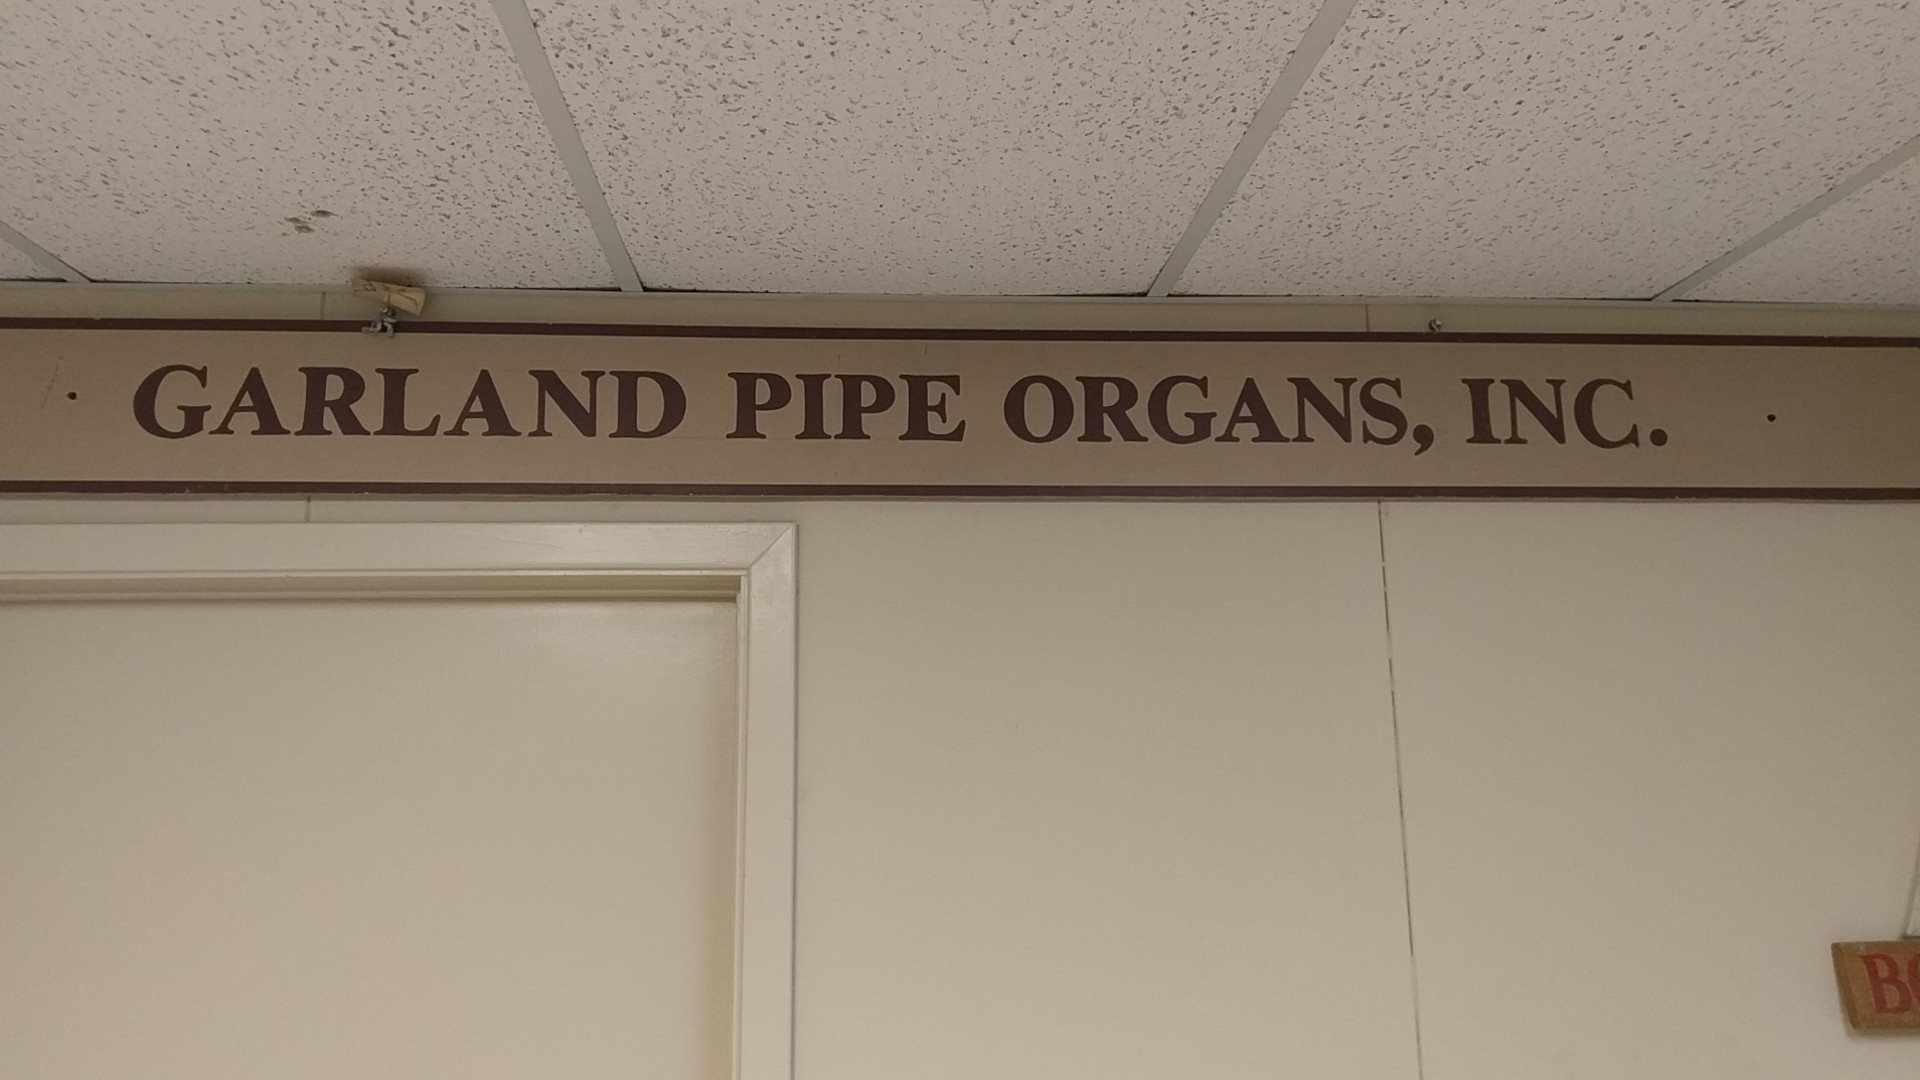 Garland Pipe Organs Inc